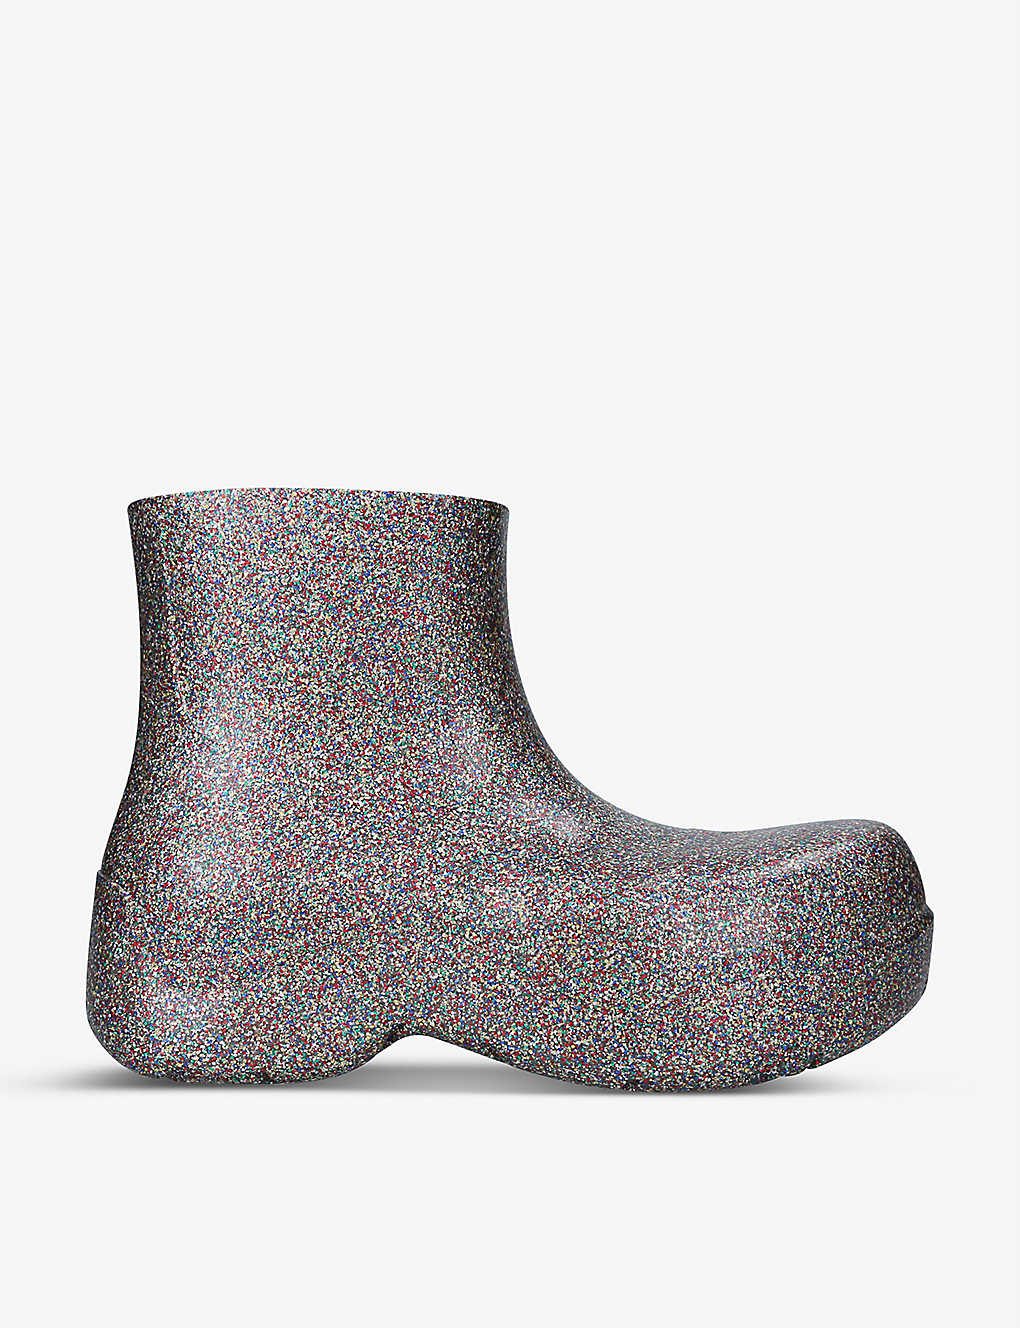 selfridges.com | BOTTEGA VENETA Puddle glittery rubber boots